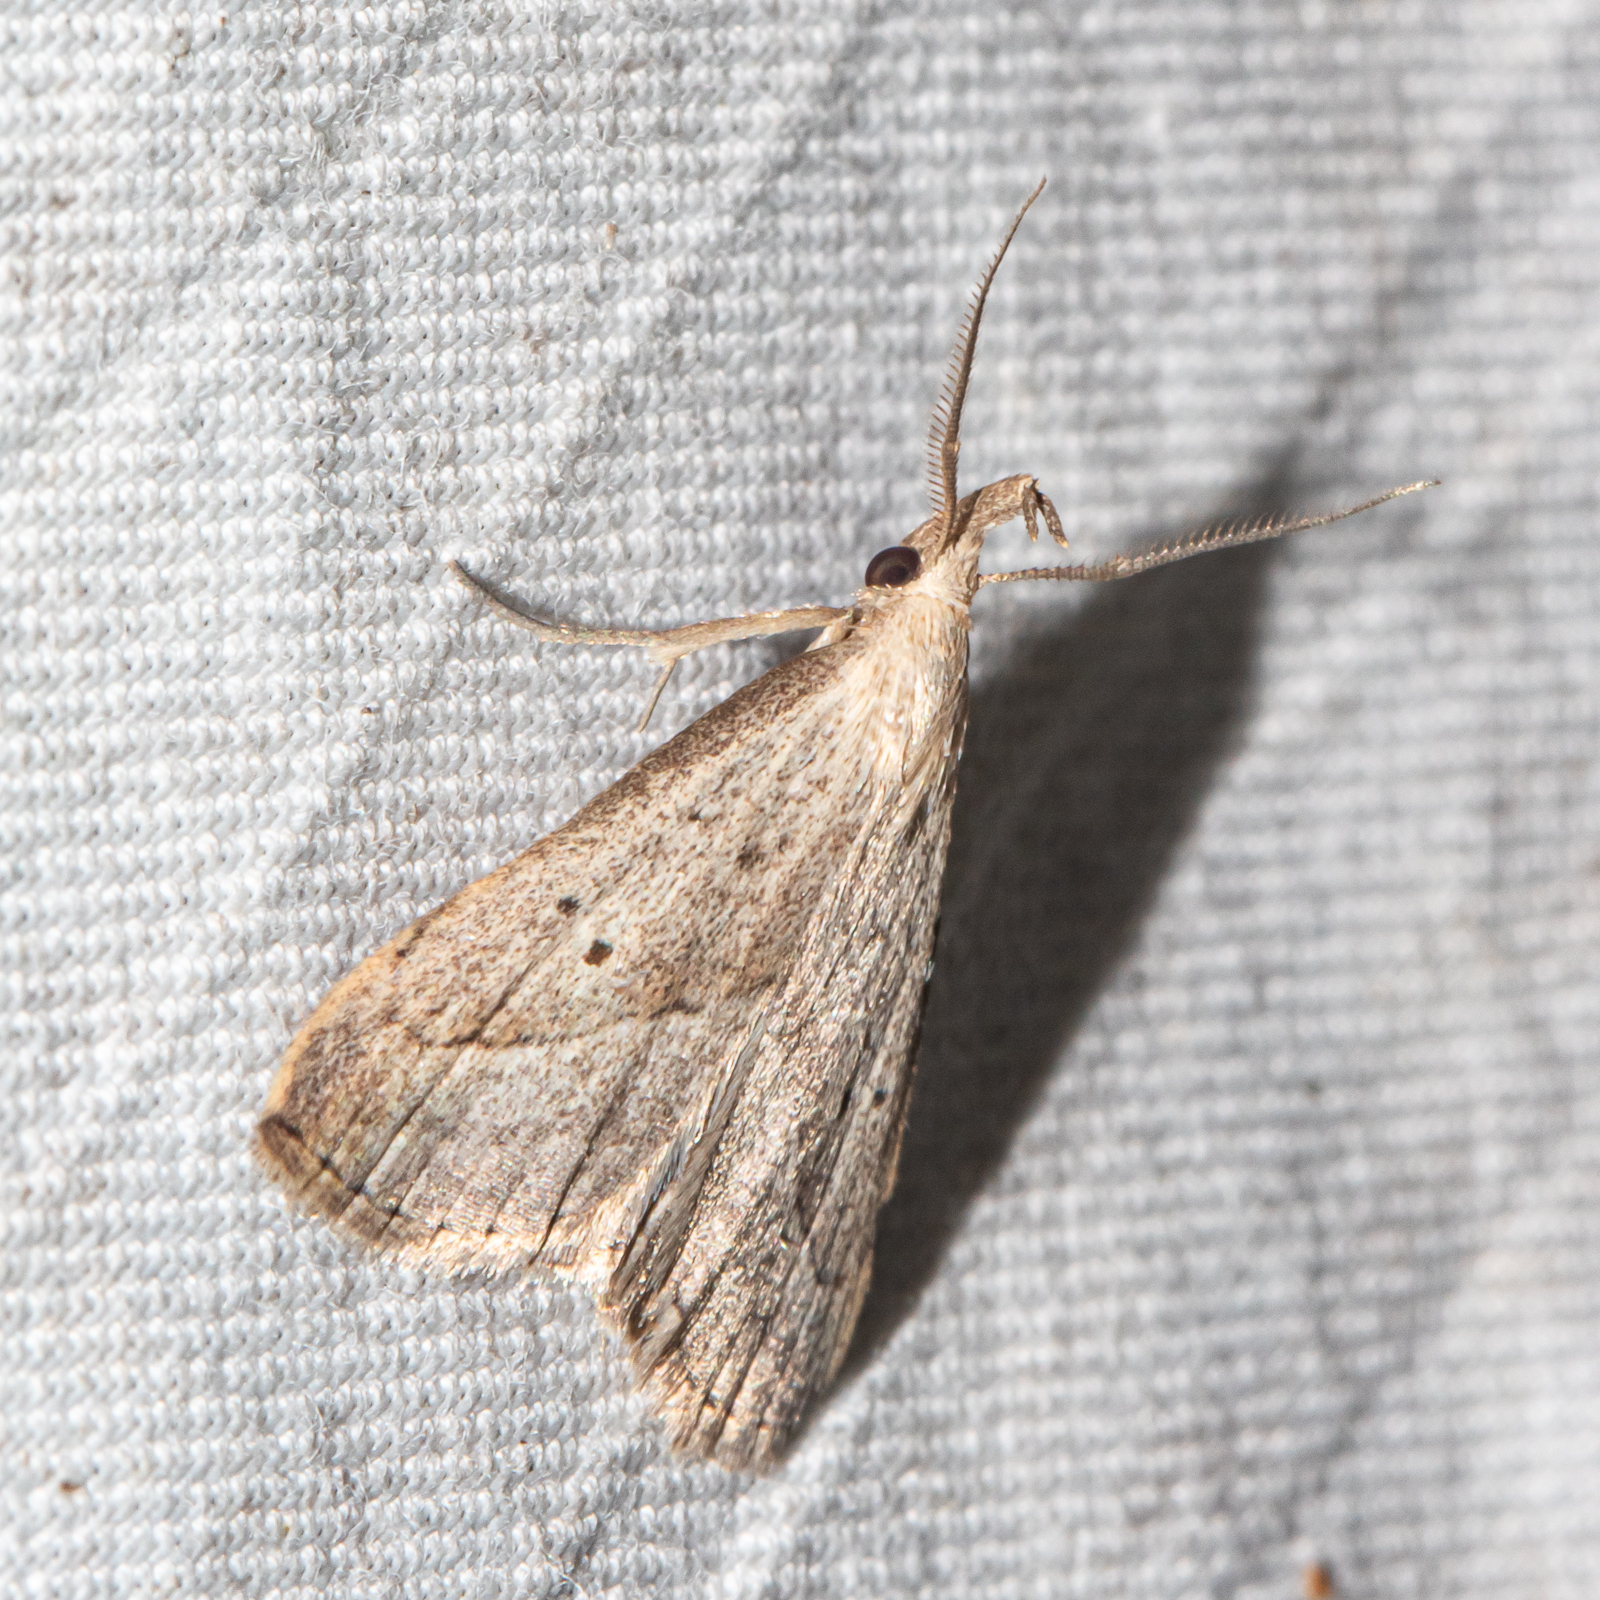 Maryland Biodiversity Project - Twin-dotted Macrochilo Moth (Macrochilo ...